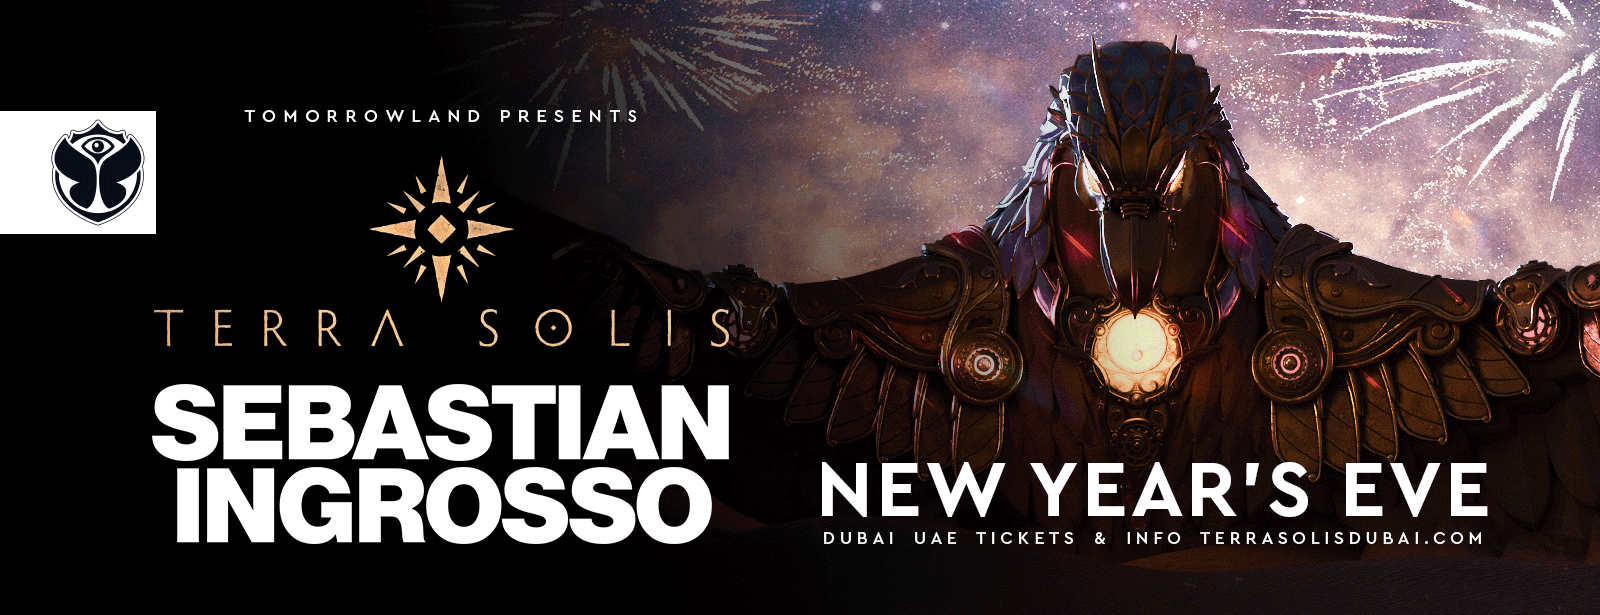 New Year’s Eve: Tomorrowland presents Sebastian Ingrosso at Terra Solis - Coming Soon in UAE